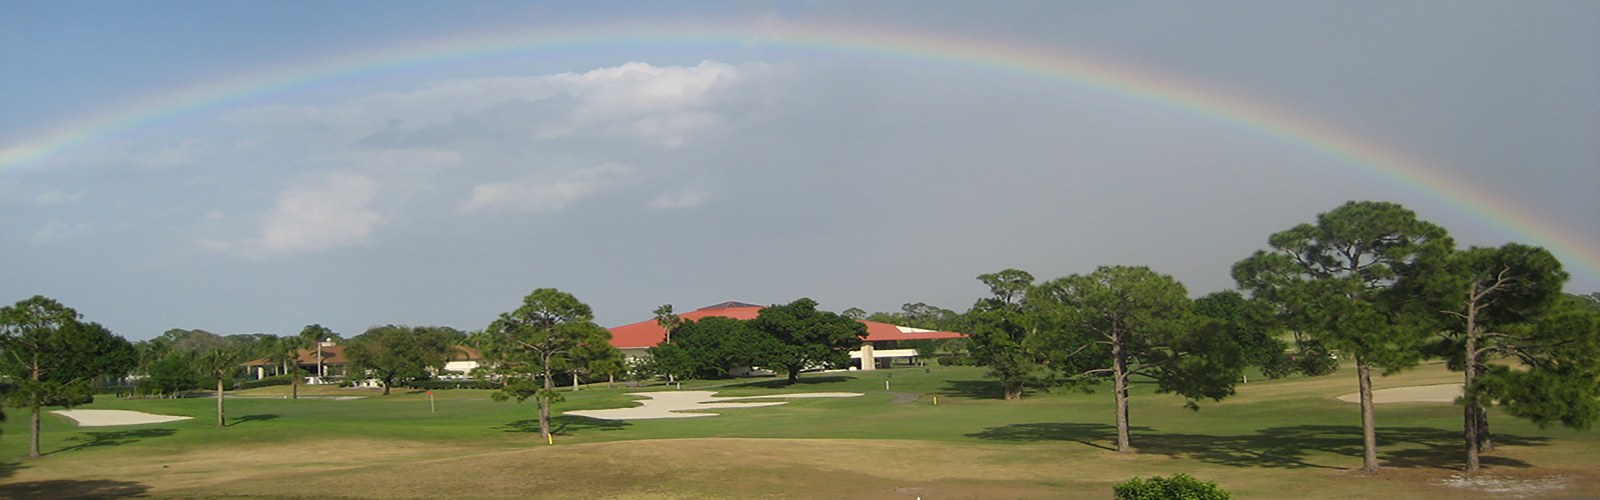 Meadowood Community Association Golf Course Rainbow Carousel Image